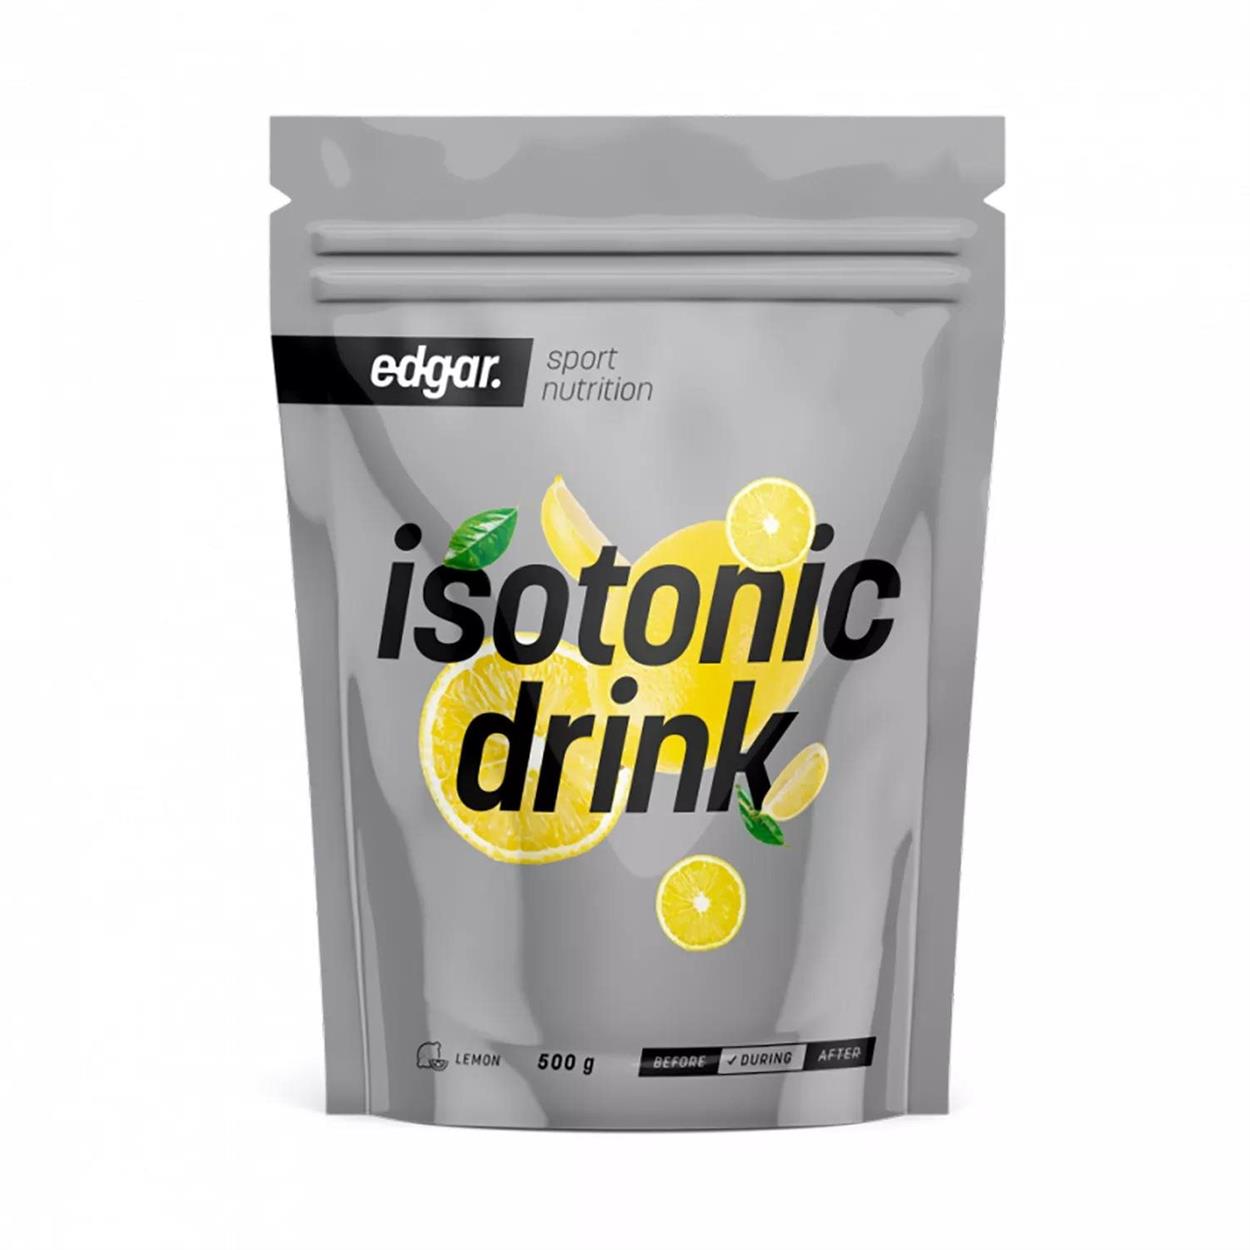 Edgar Isotonic Drink 500 g, citron